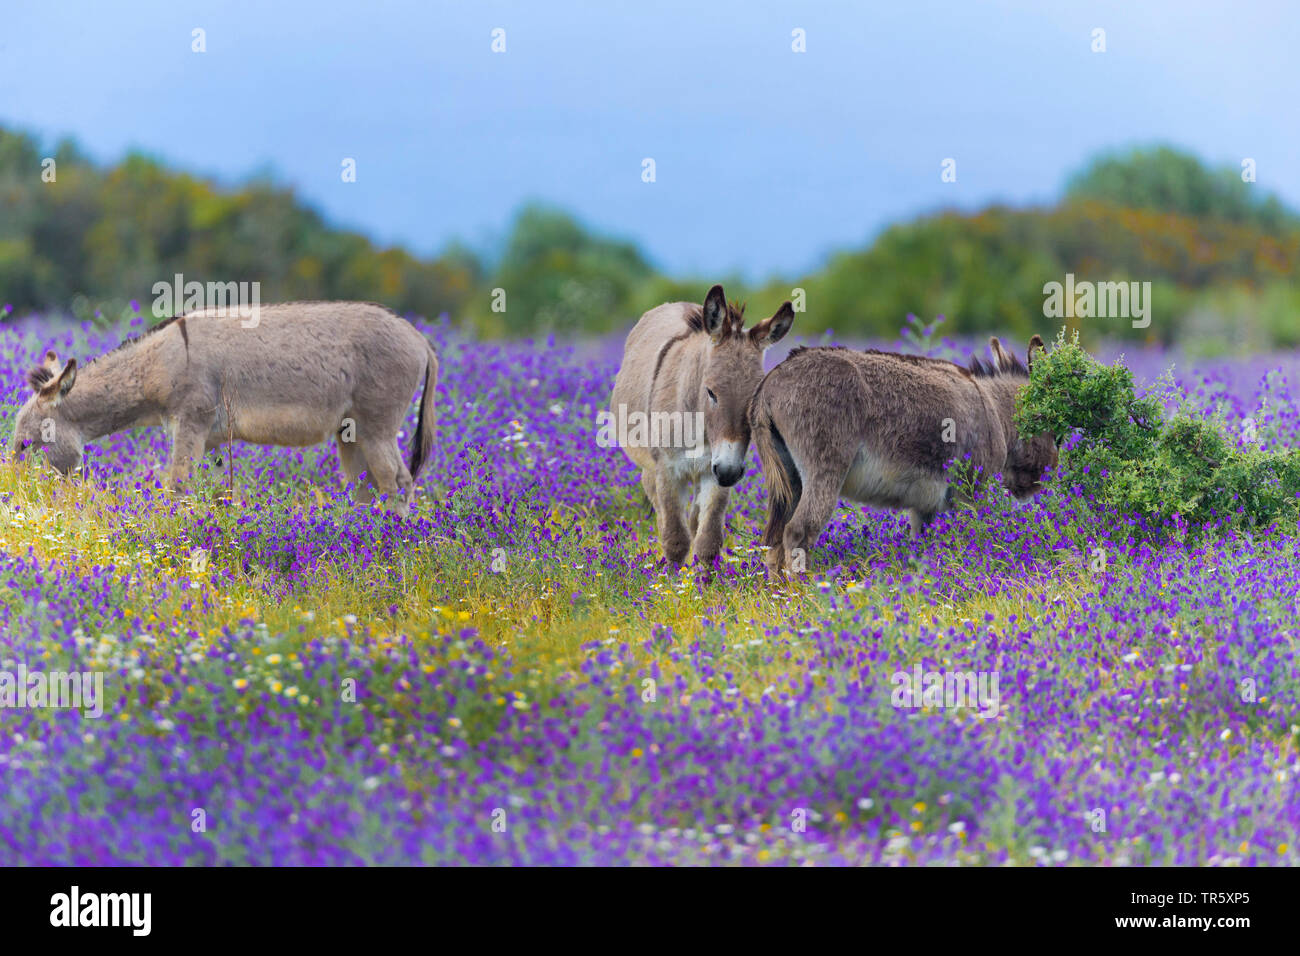 Domestic donkey (Equus asinus asinus), three grazing donkeys in a blooming flower meadow, Italy, Sardegna, Alghero Stock Photo